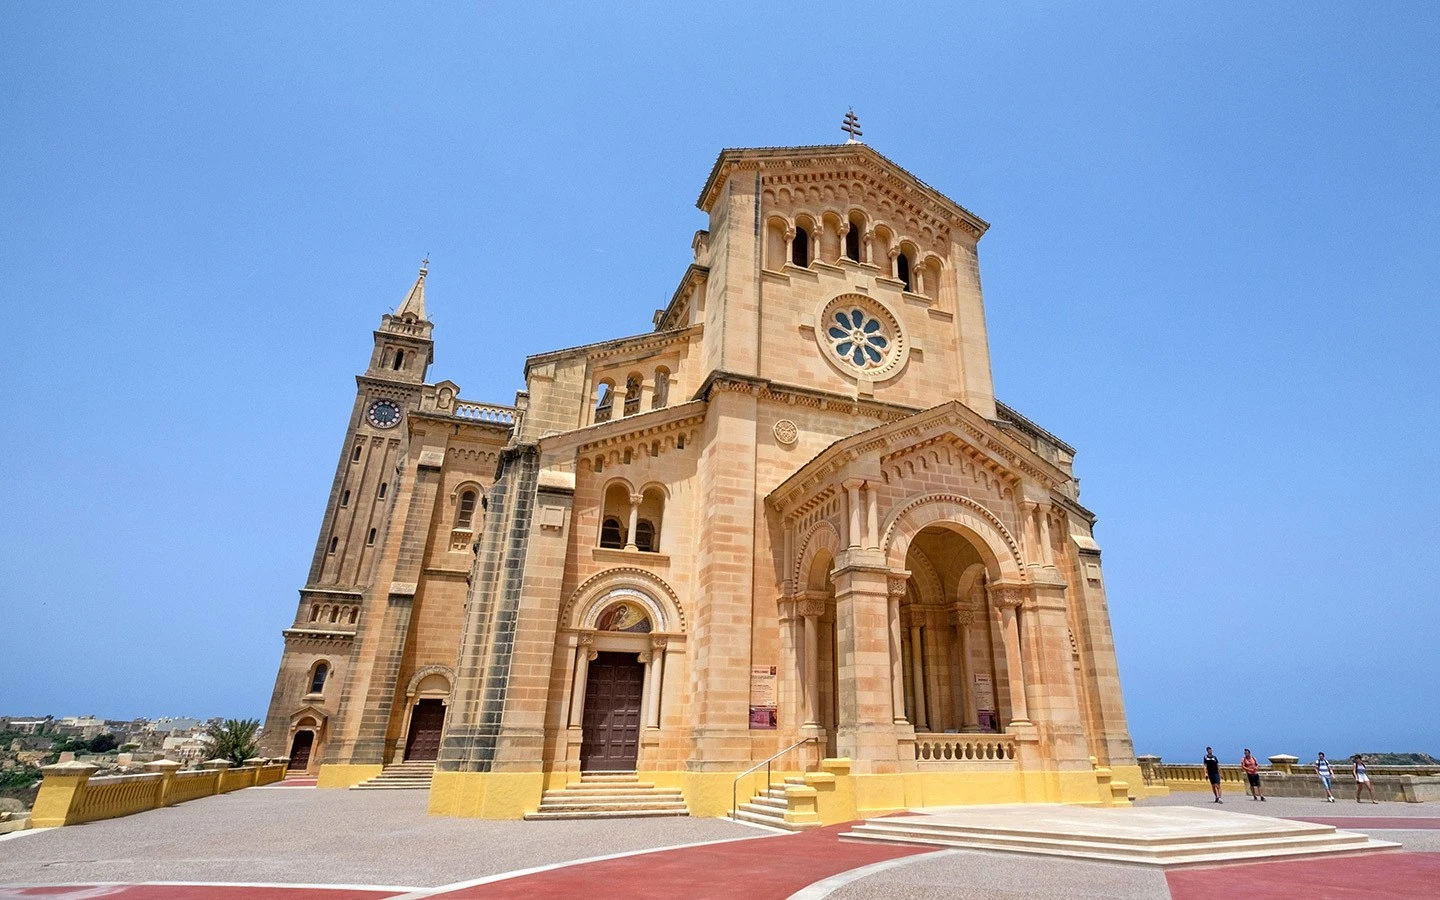 Ta’ Pinu basilica in Gozo, Malta